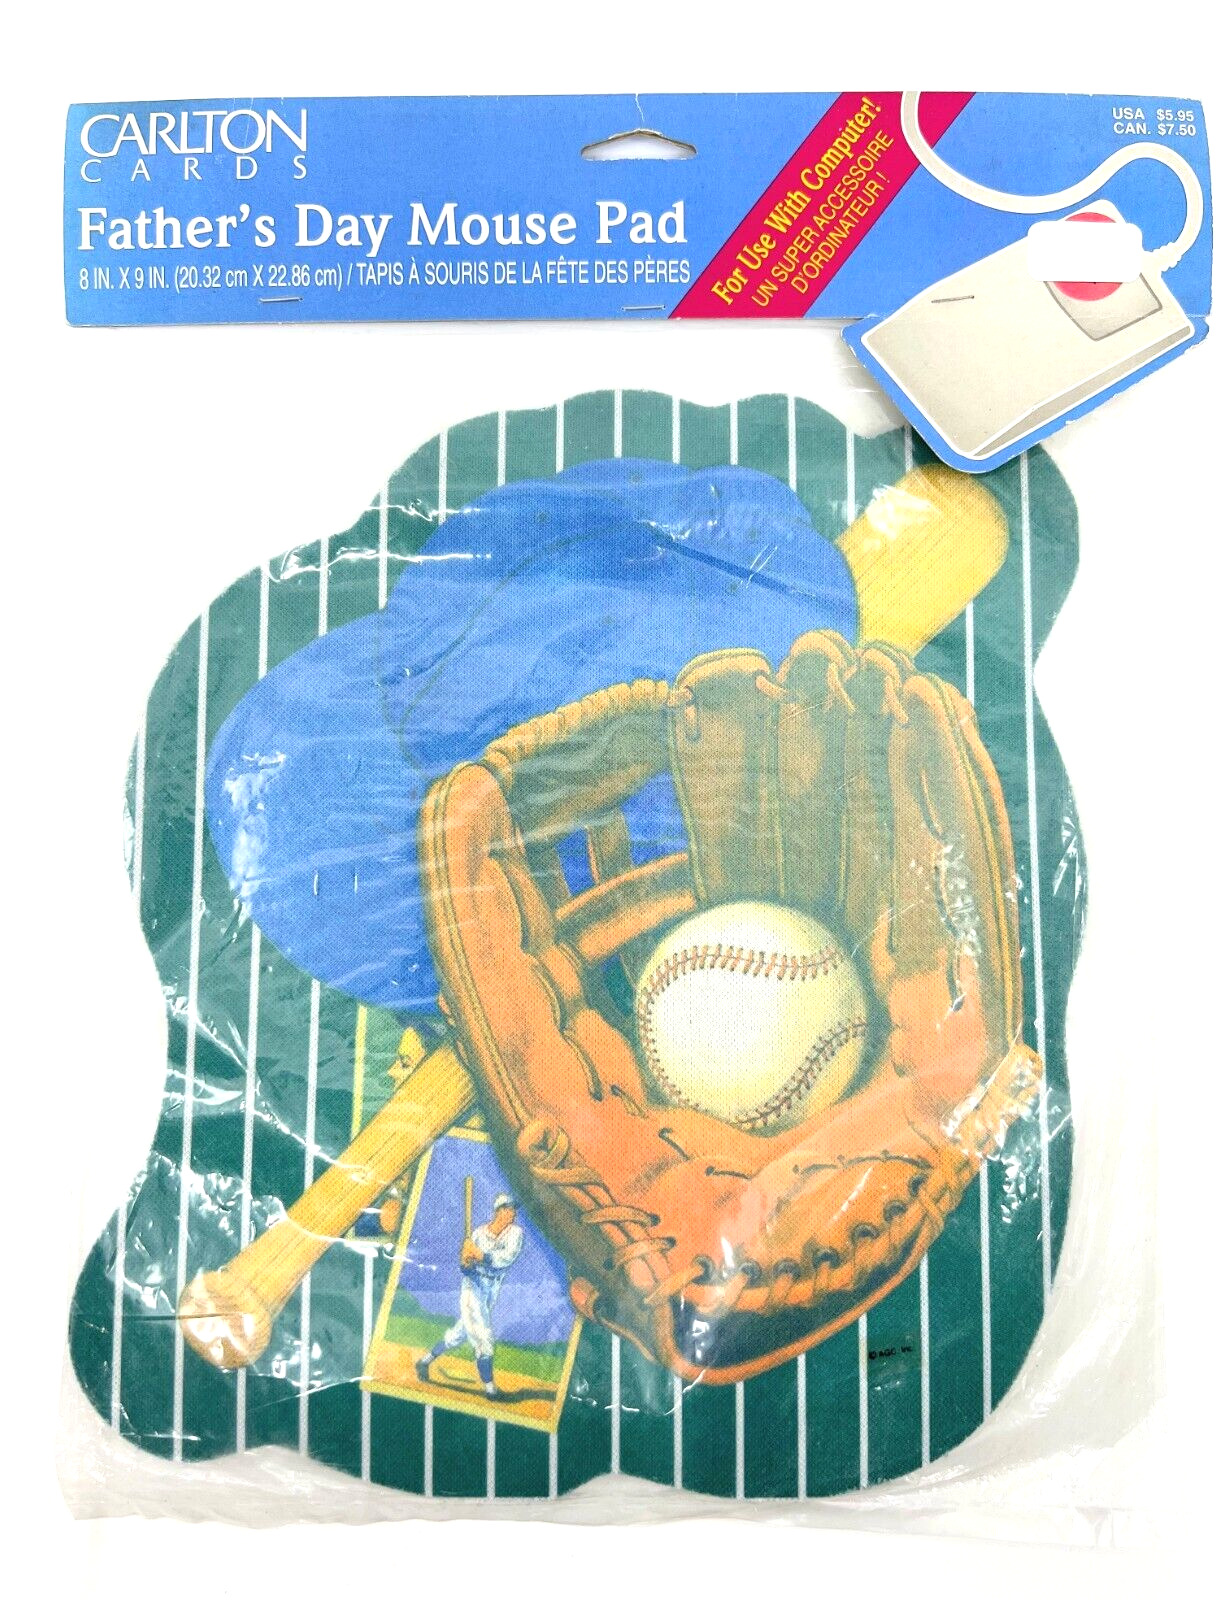 NEW Carlton Cards Vintage Baseball Themed Pitcher & Bat Mouse Pad, 8x9